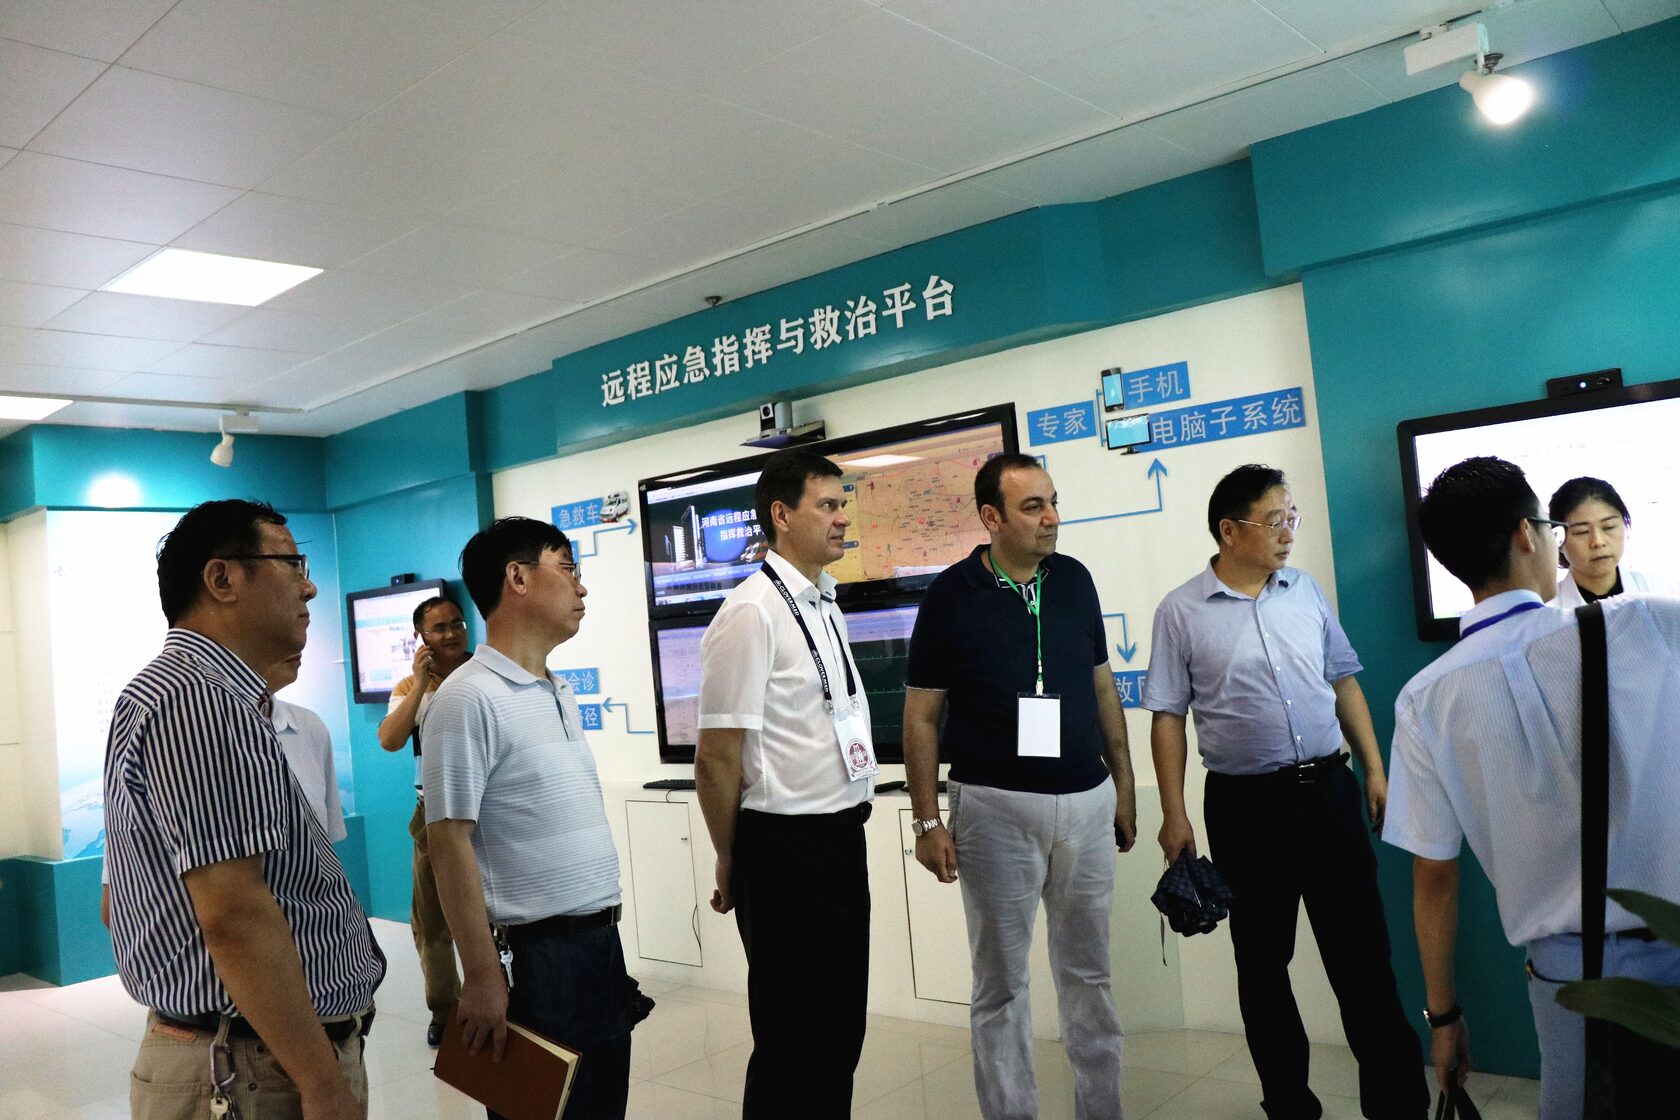 2016, Clinical center, Zhengzhou University, China